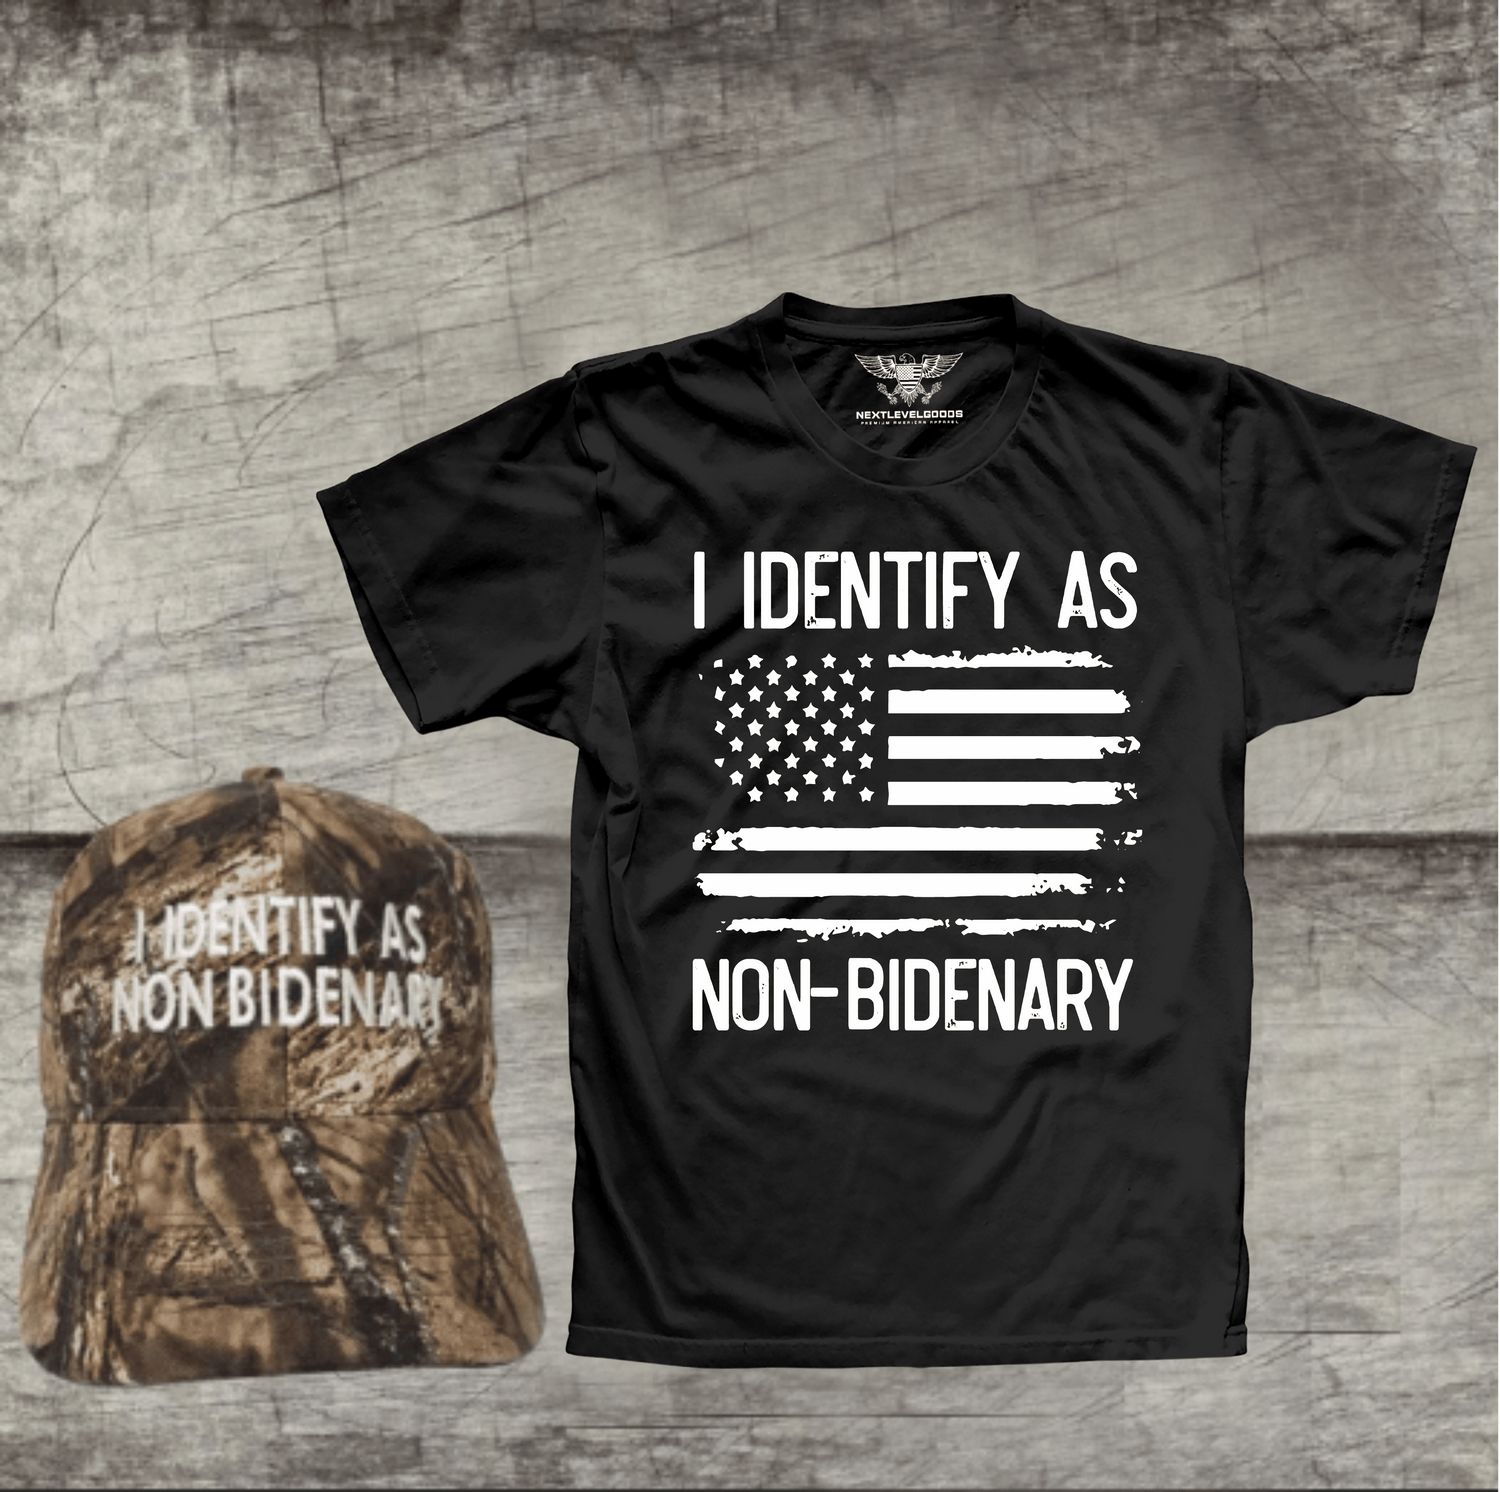 I Identify As Non-Bidenary T-Shirt - Free Mossy Oak Hat